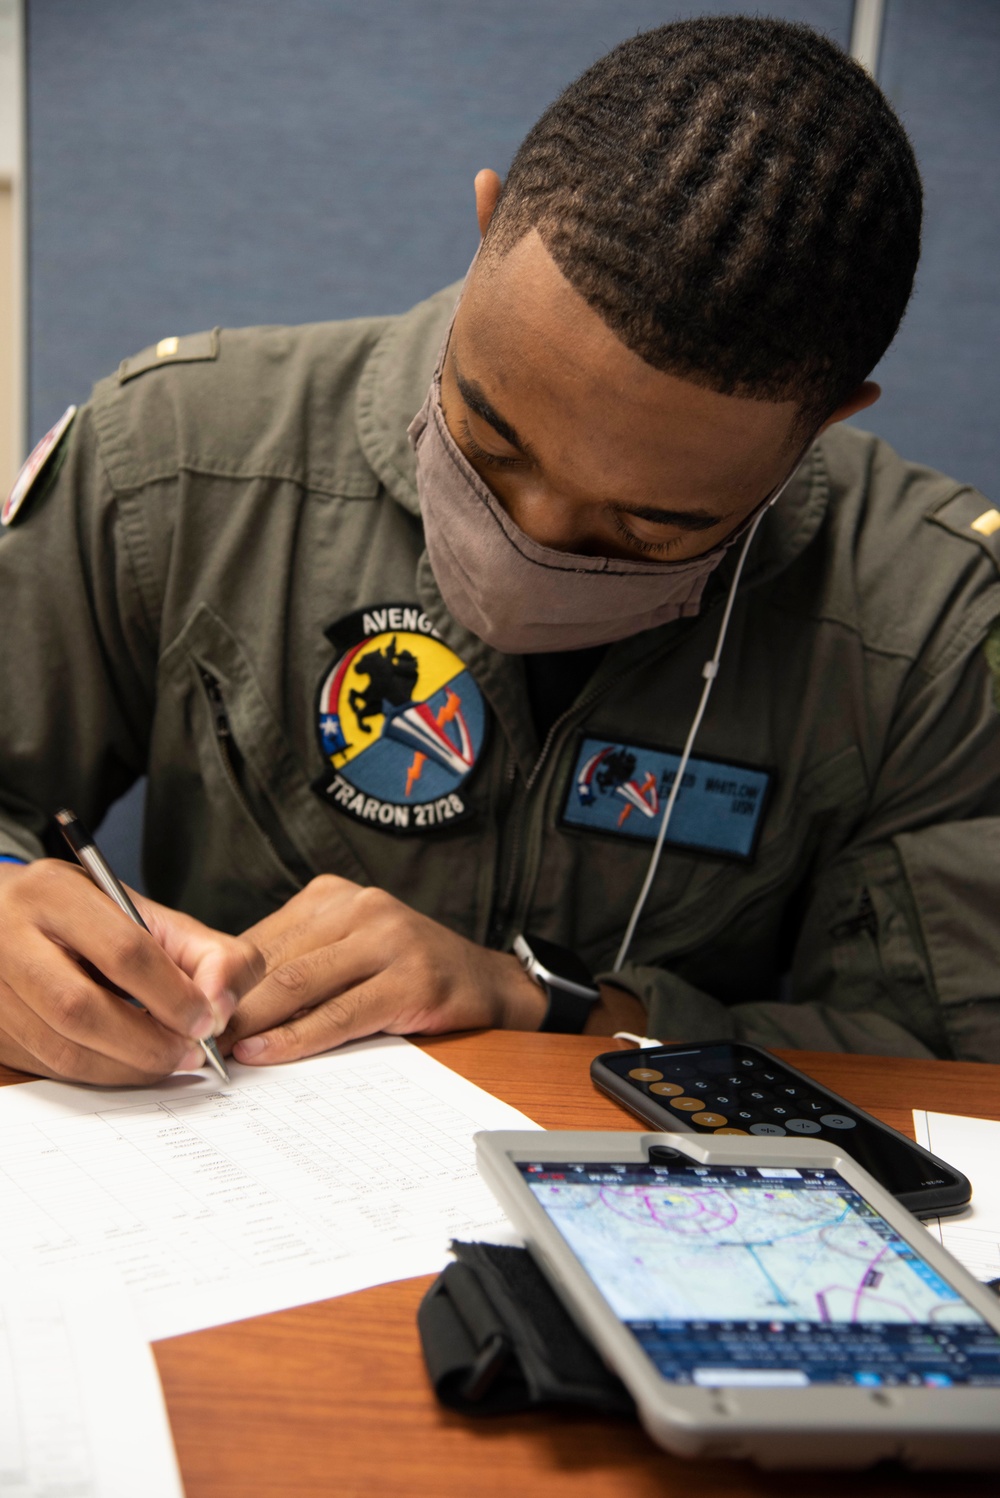 Naval Aviation Training Next - Project Avenger ground school